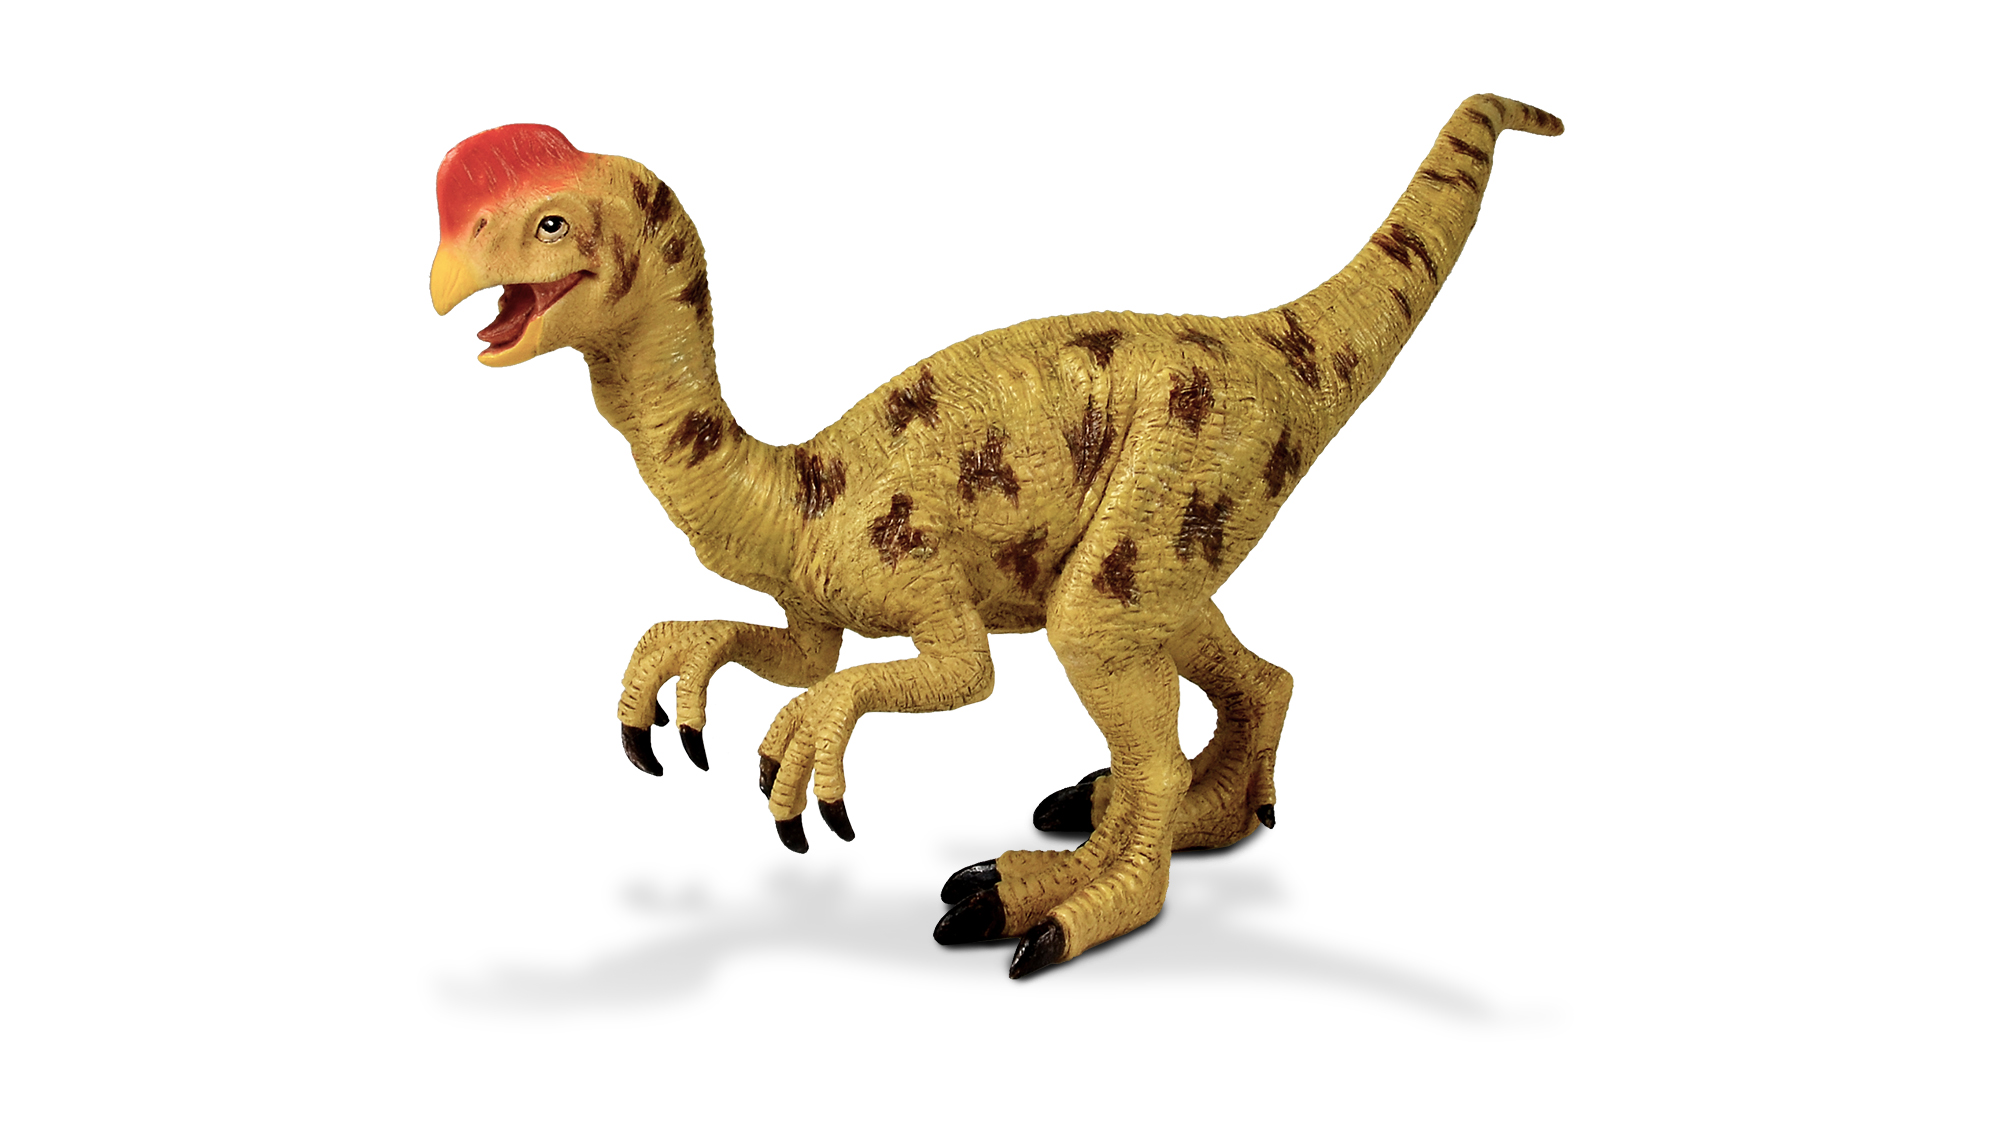 Dinosaur Model Toy - Oviraptor toy for gift